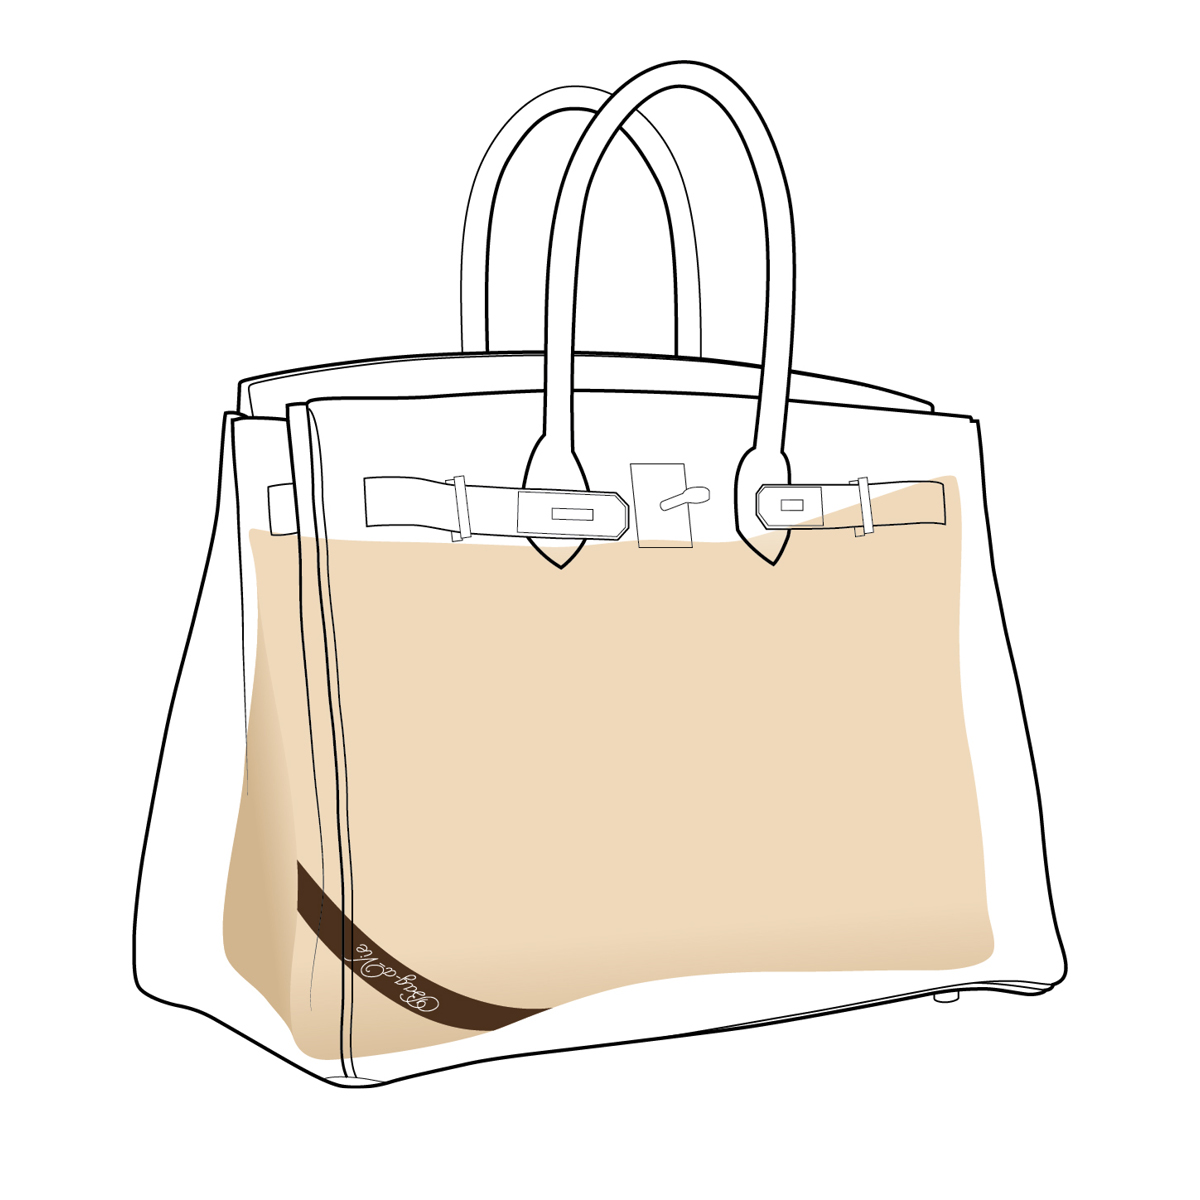 YBB Birkin Bag Pillow (Different sizes) – Your Beloved Bag